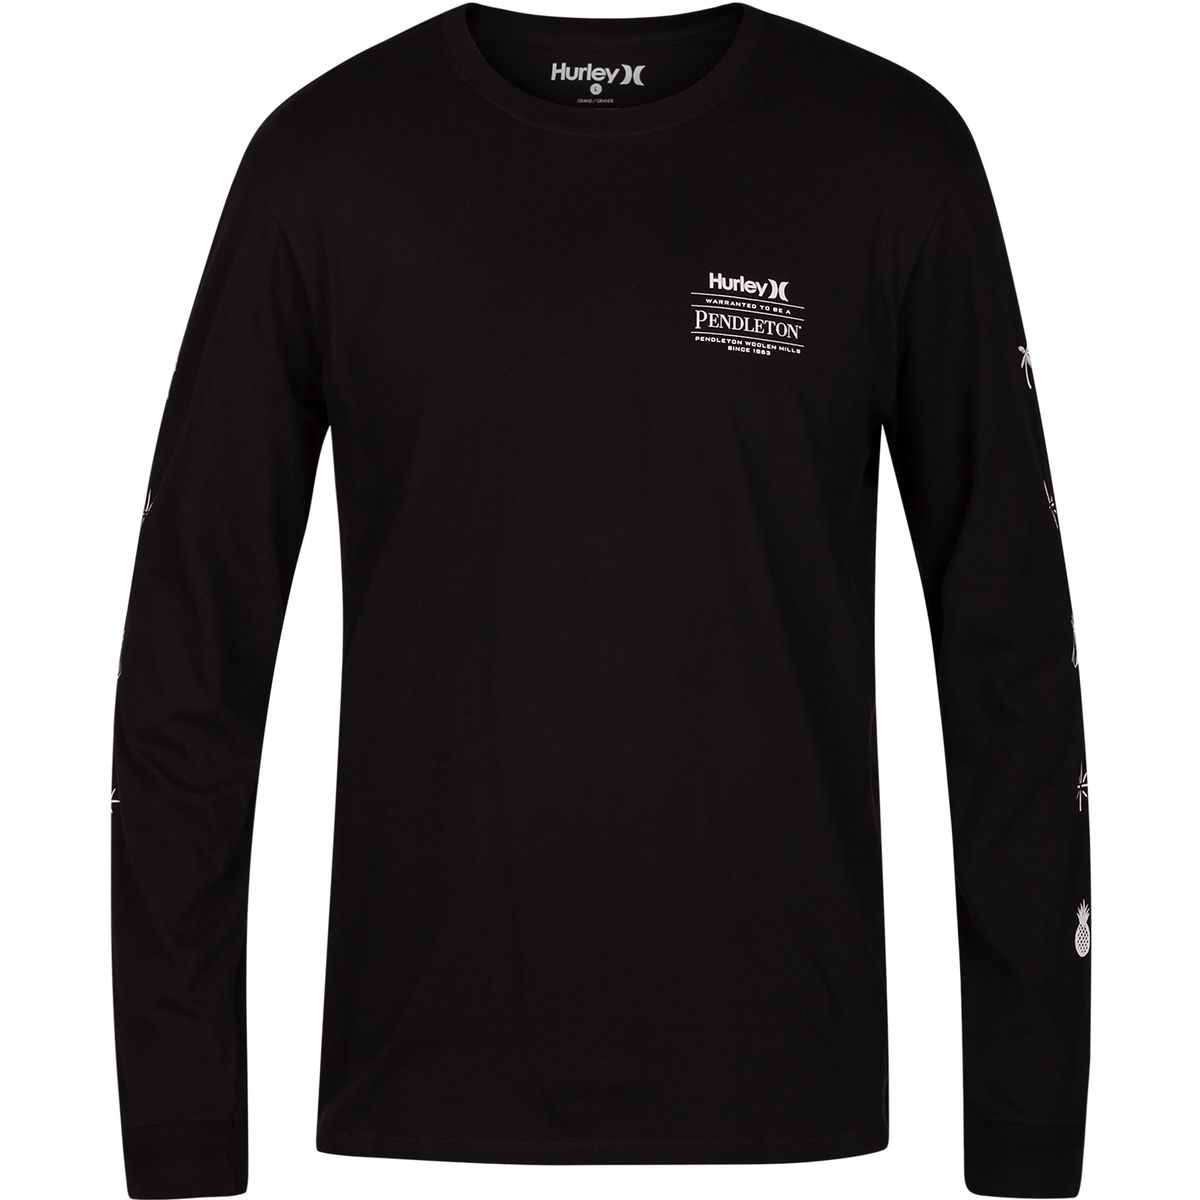 Hurley Men's T-Shirts, stylish comfort clothing